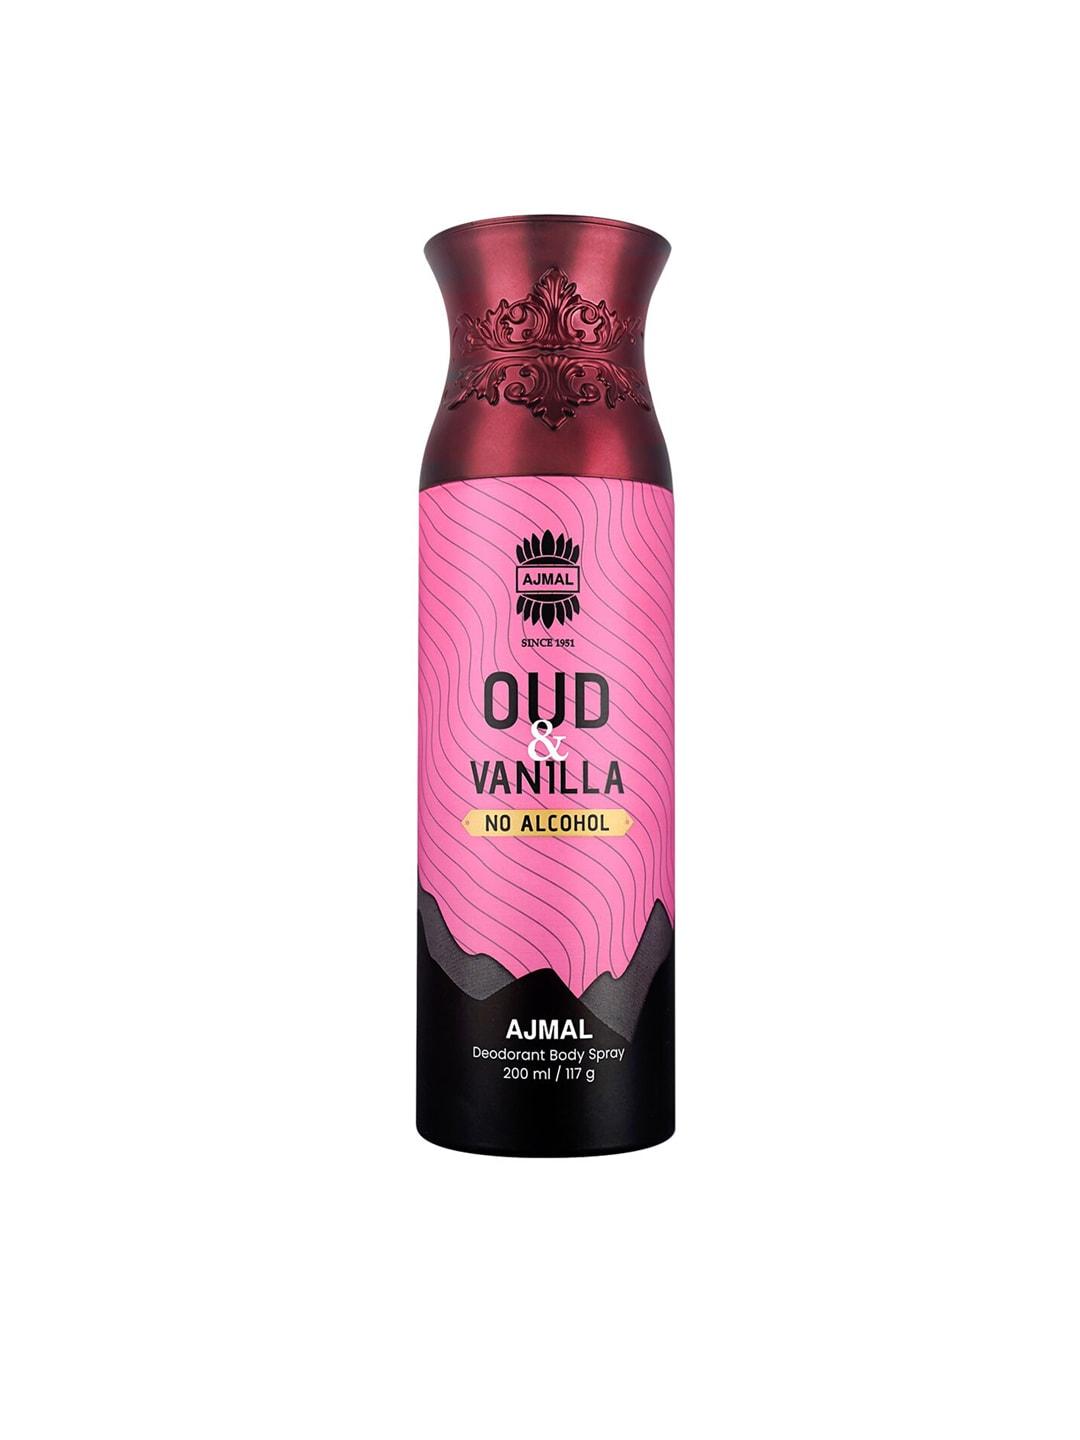 Ajmal Oud Vanilla Deodorant Body Spray - 200ml/117g